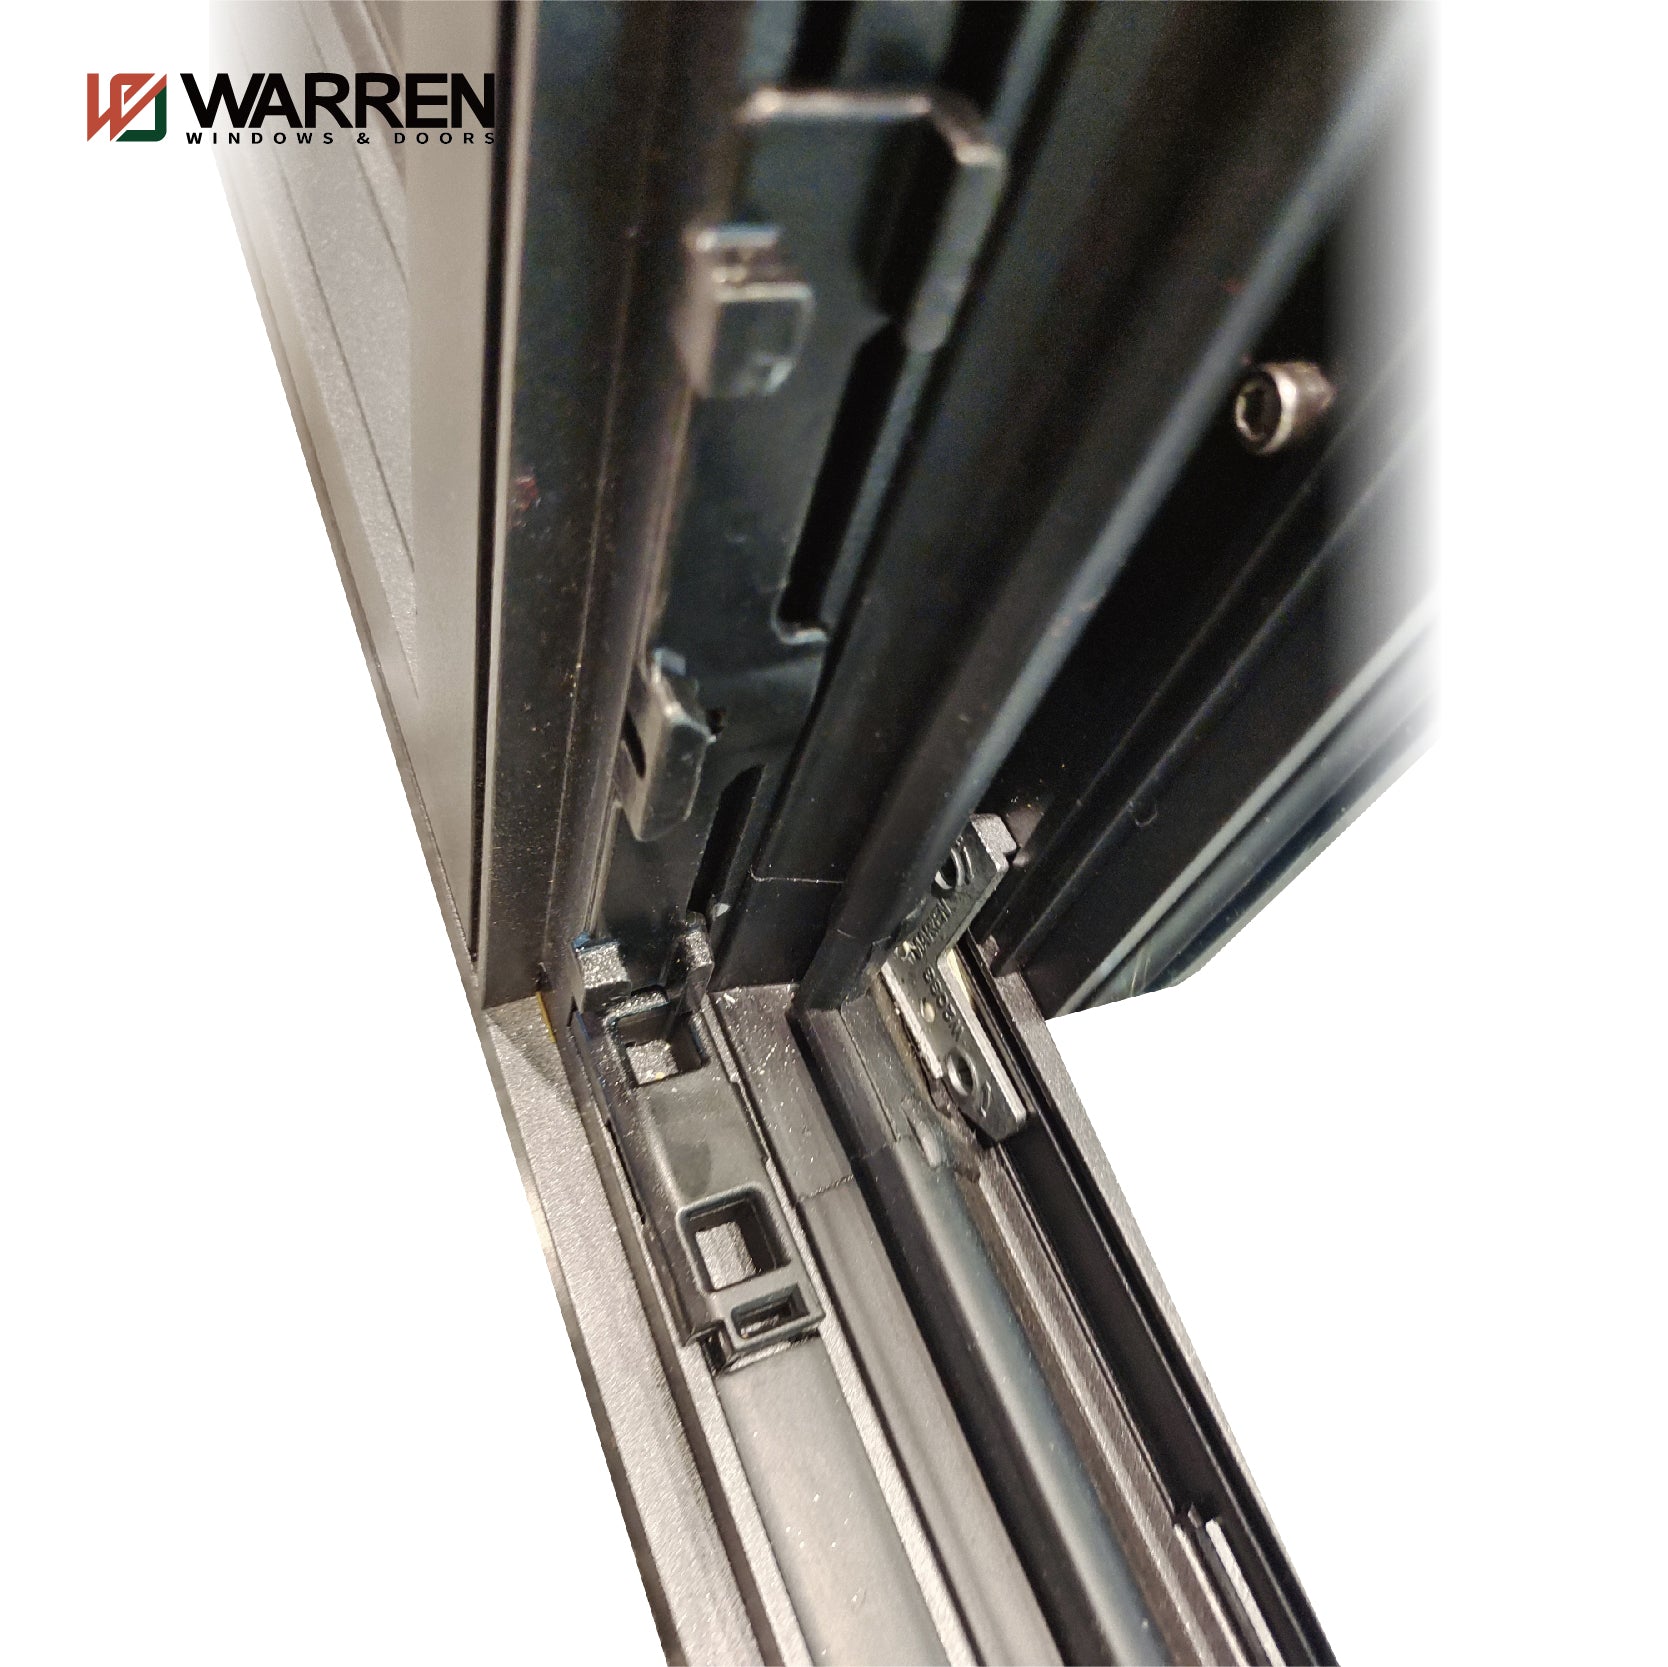 Warren Professional factory Aluminum Tilt And Turn Window Slim Window For all rooms